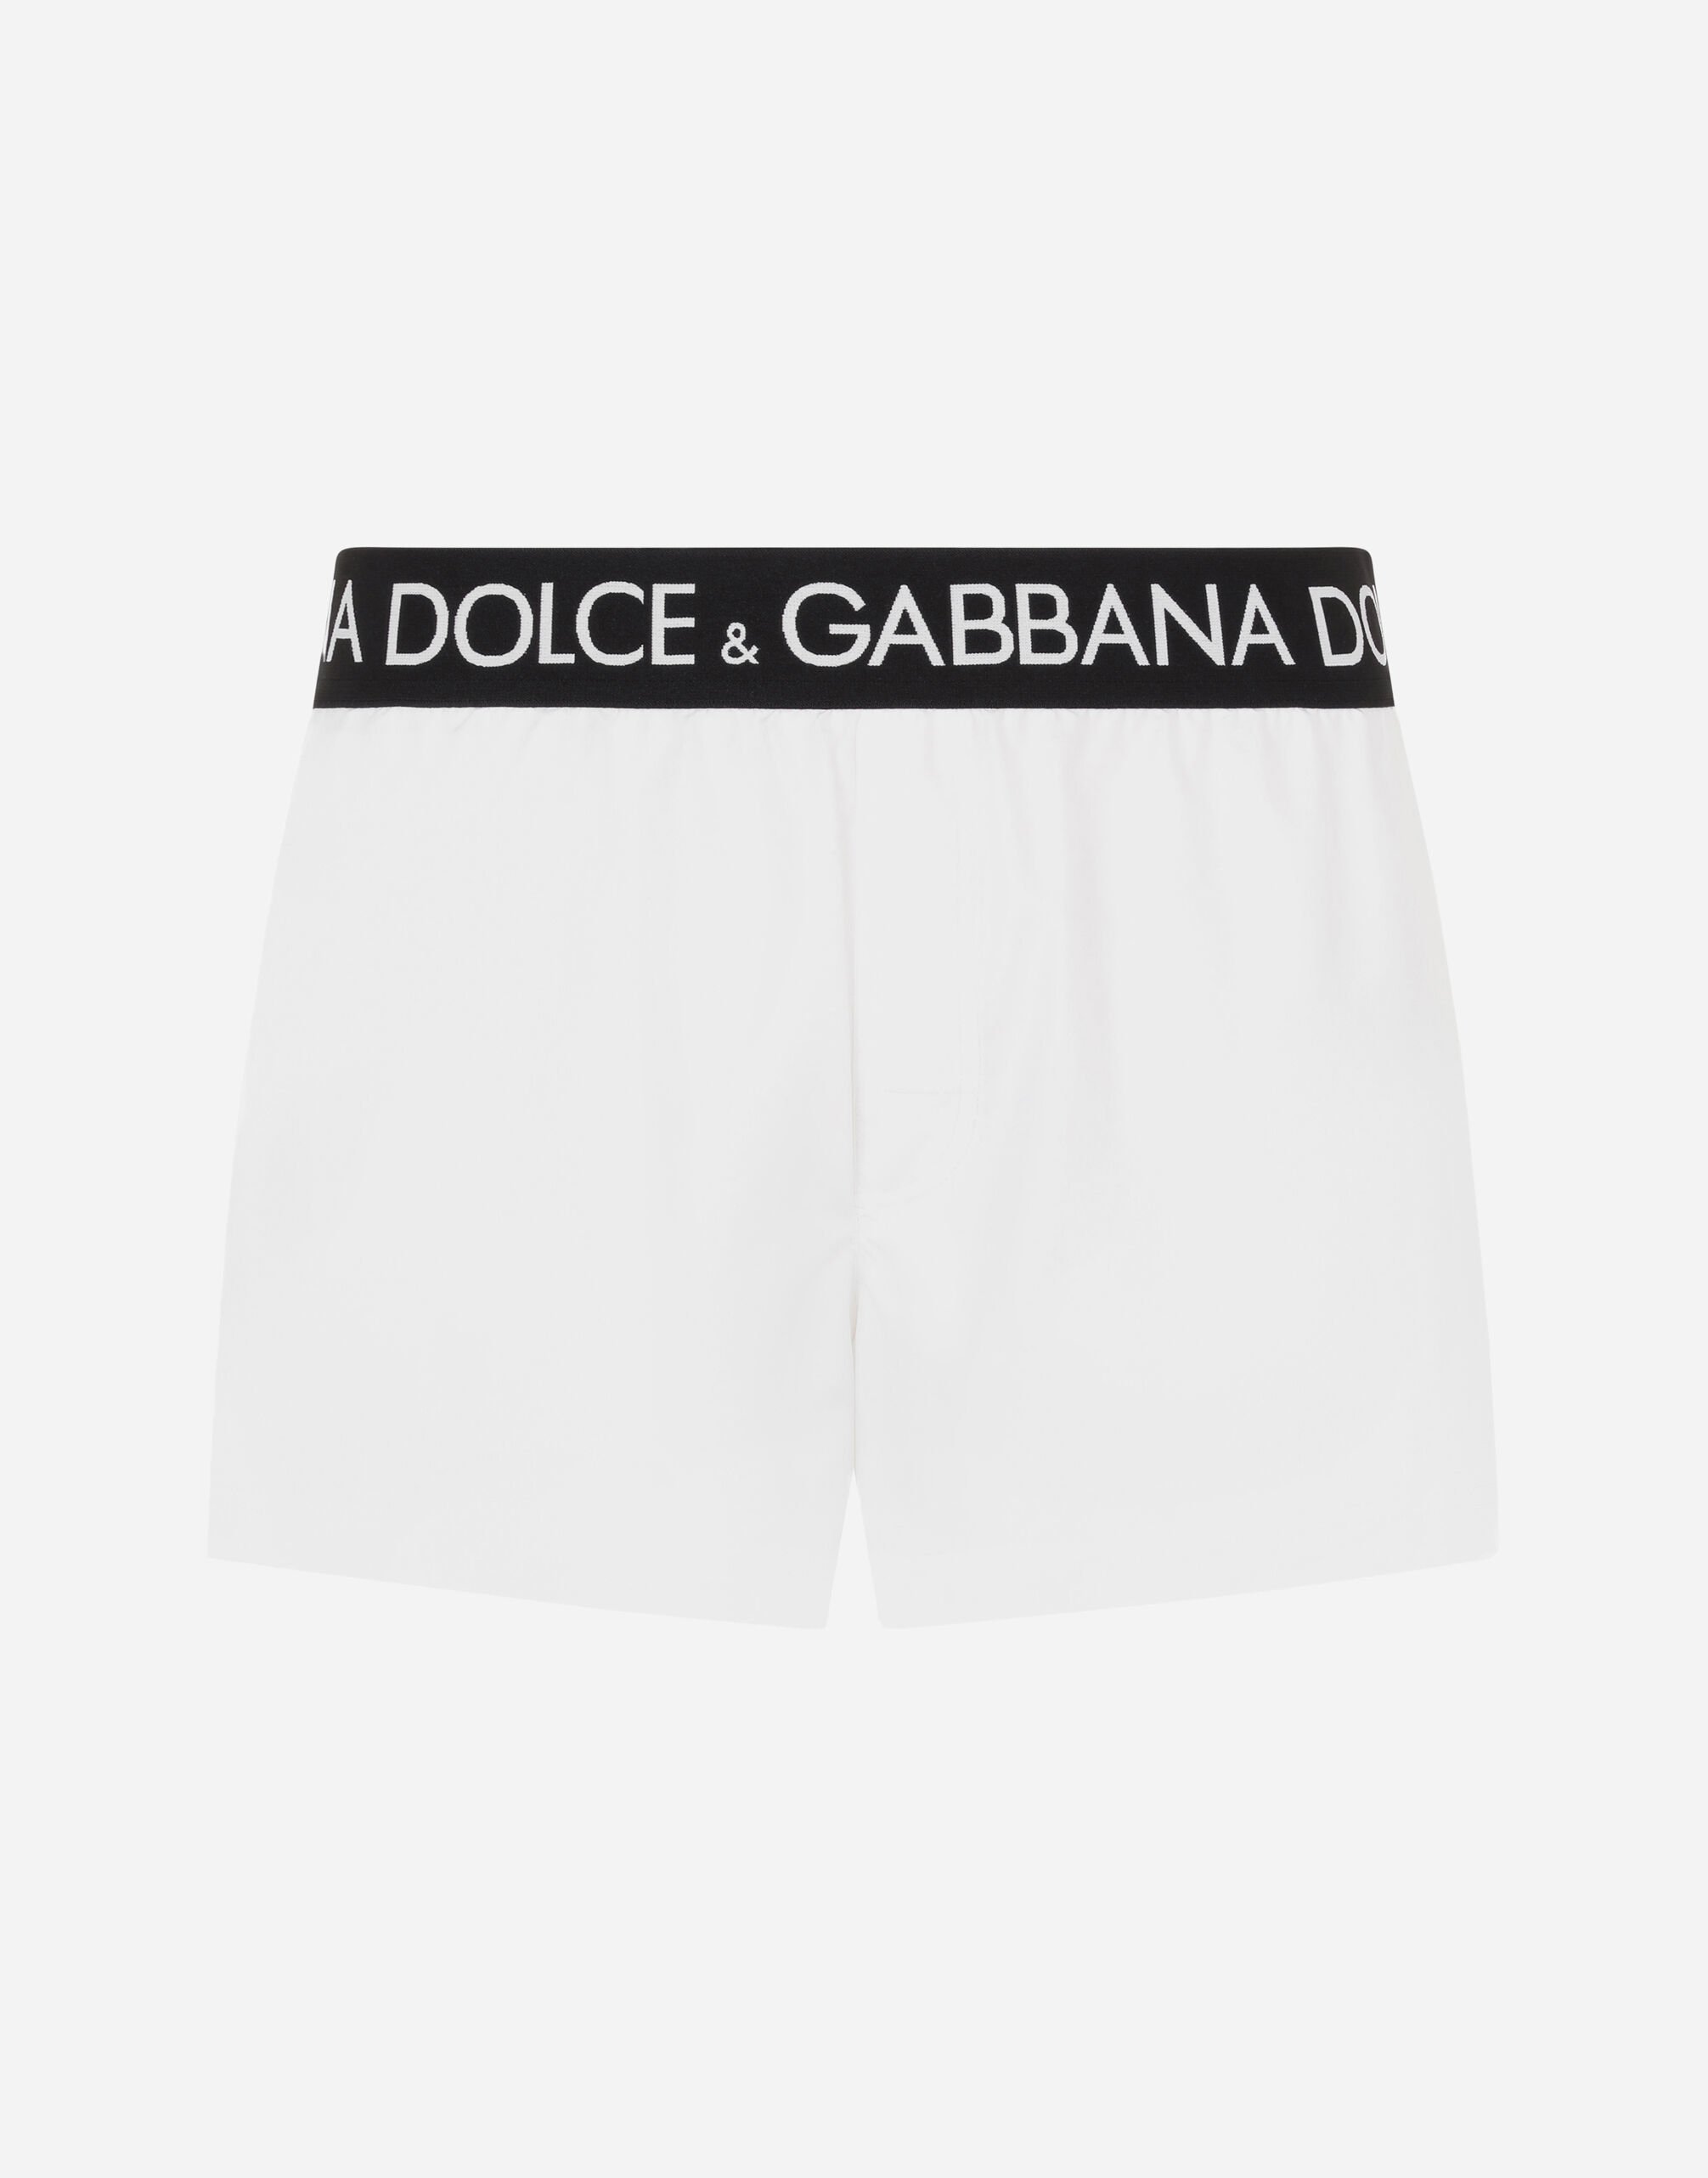 Dolce&Gabbana ビーチボクサー ショート ロゴウエストバンド ブラック GY6IETFUFJR